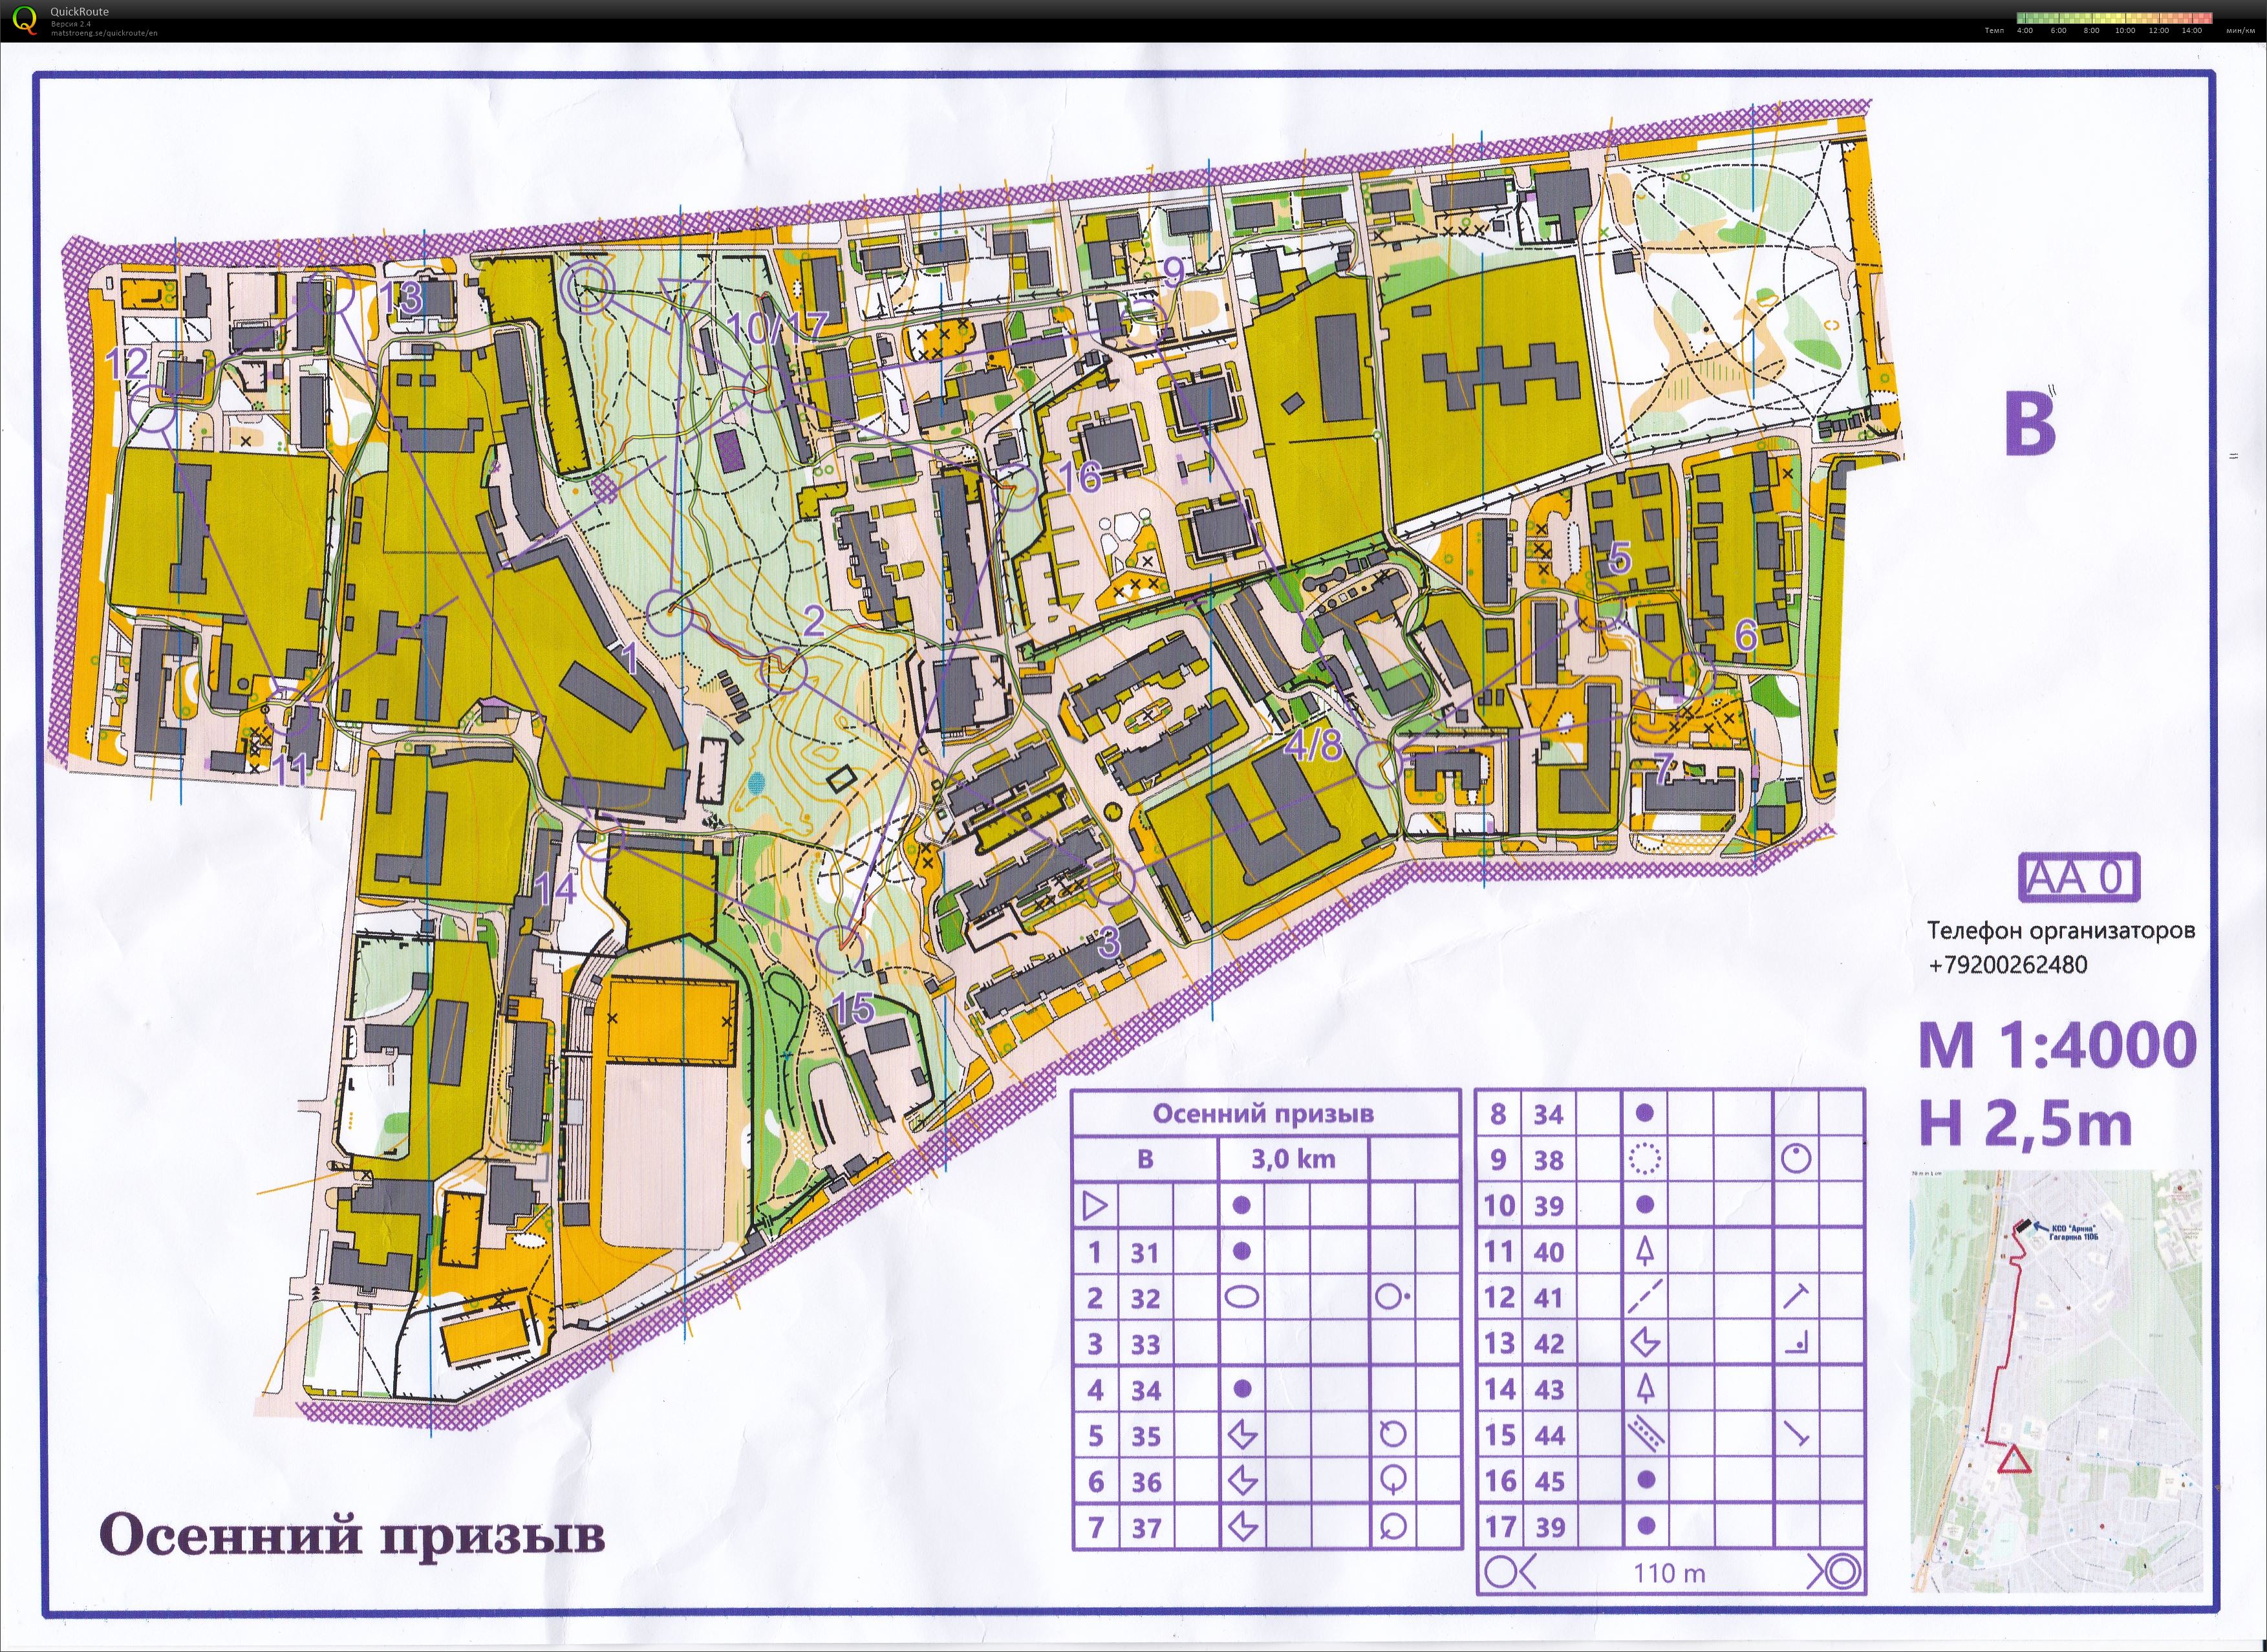 Map with track - Осенний призыв 2022. 5й этап, area - Улица Горная, from orienteering map archive of Павел Строкин